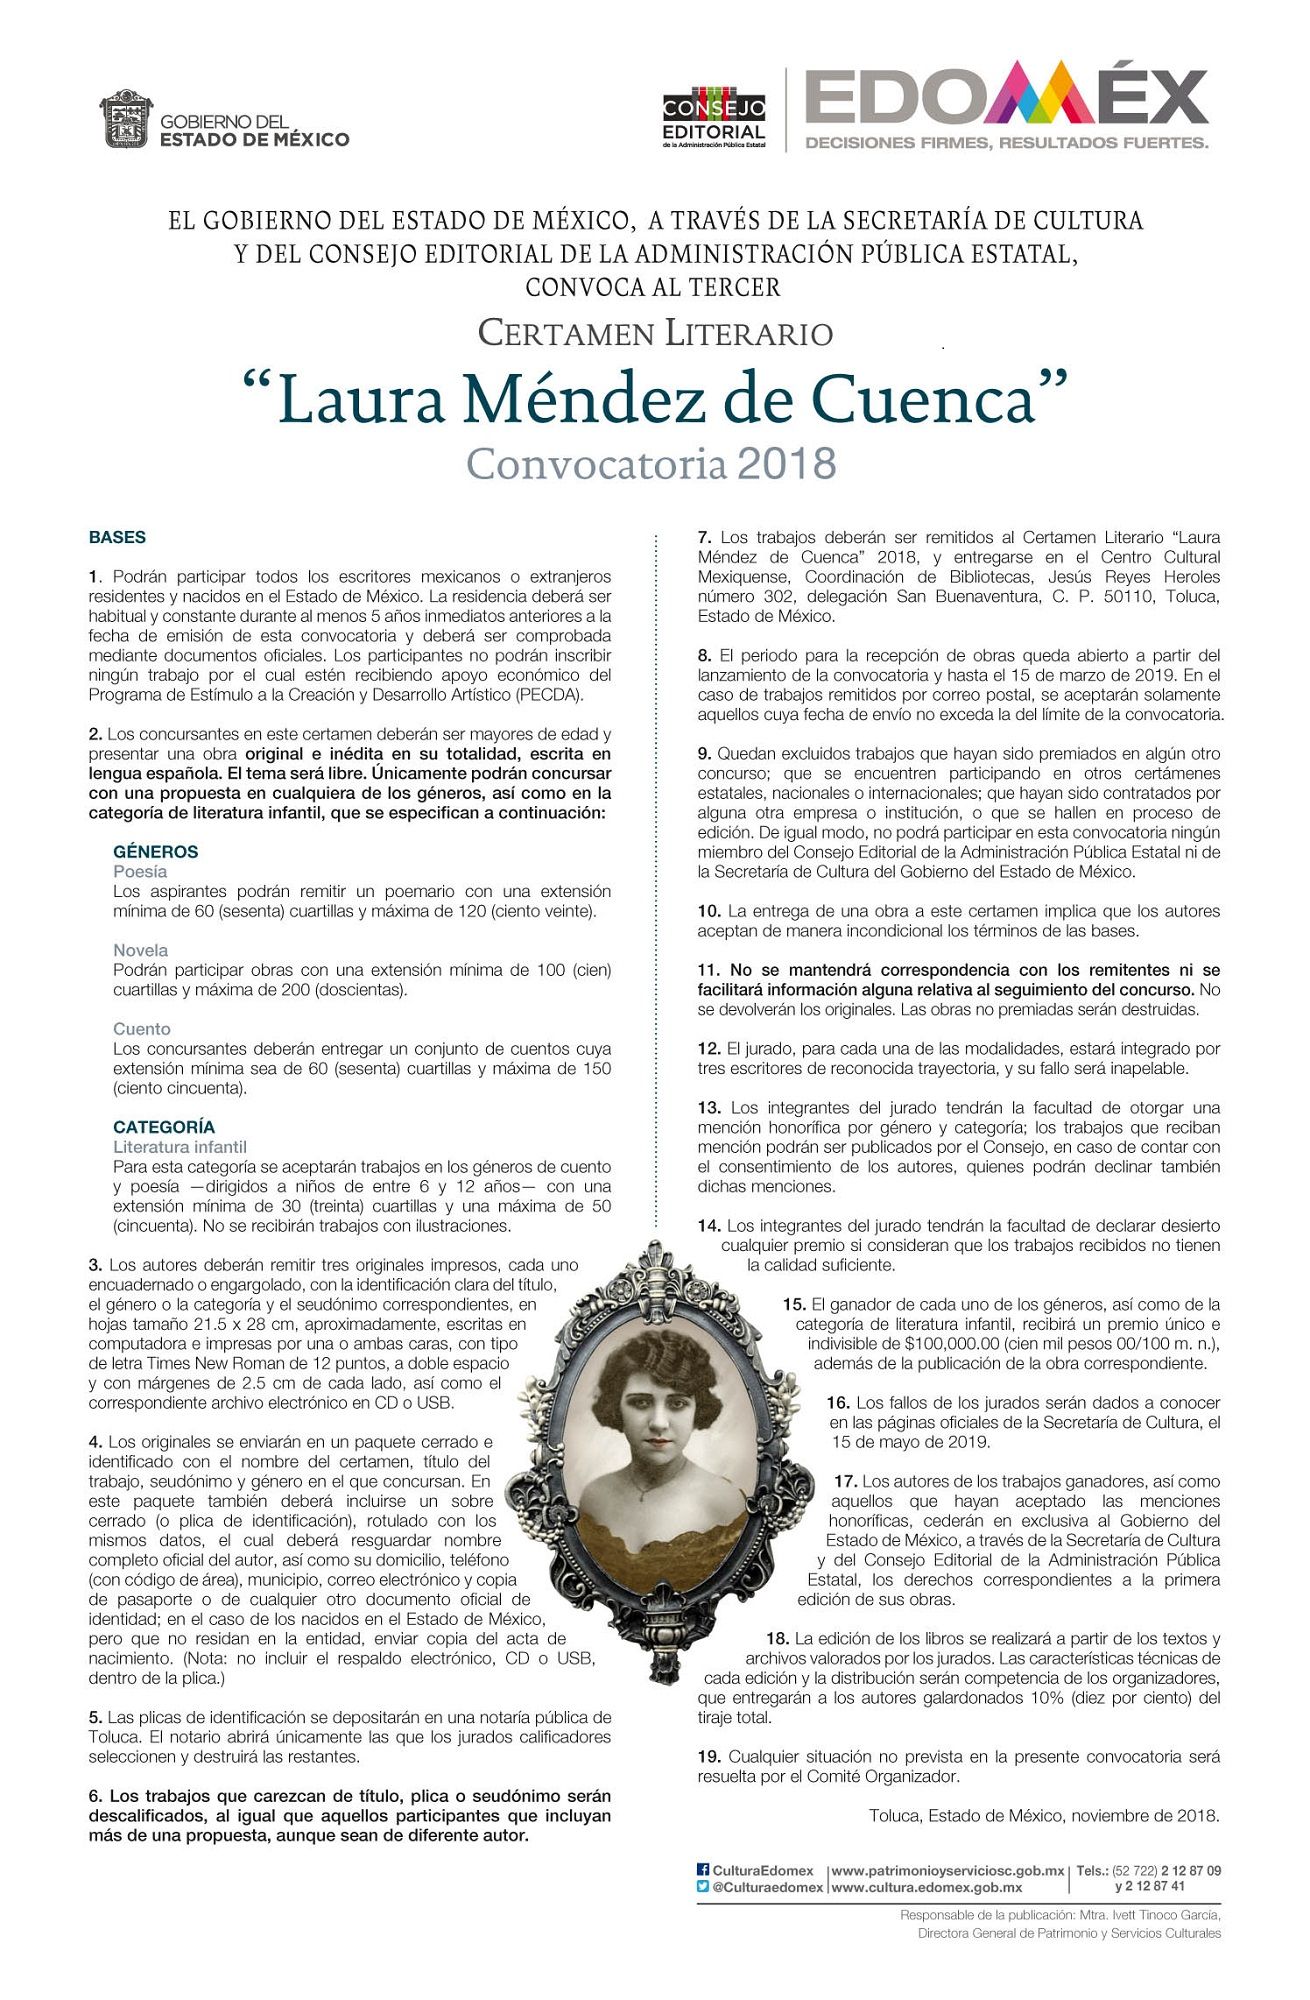 Convocan a participar en el certamen literario " Laura Méndez de Cuenca" 2018.